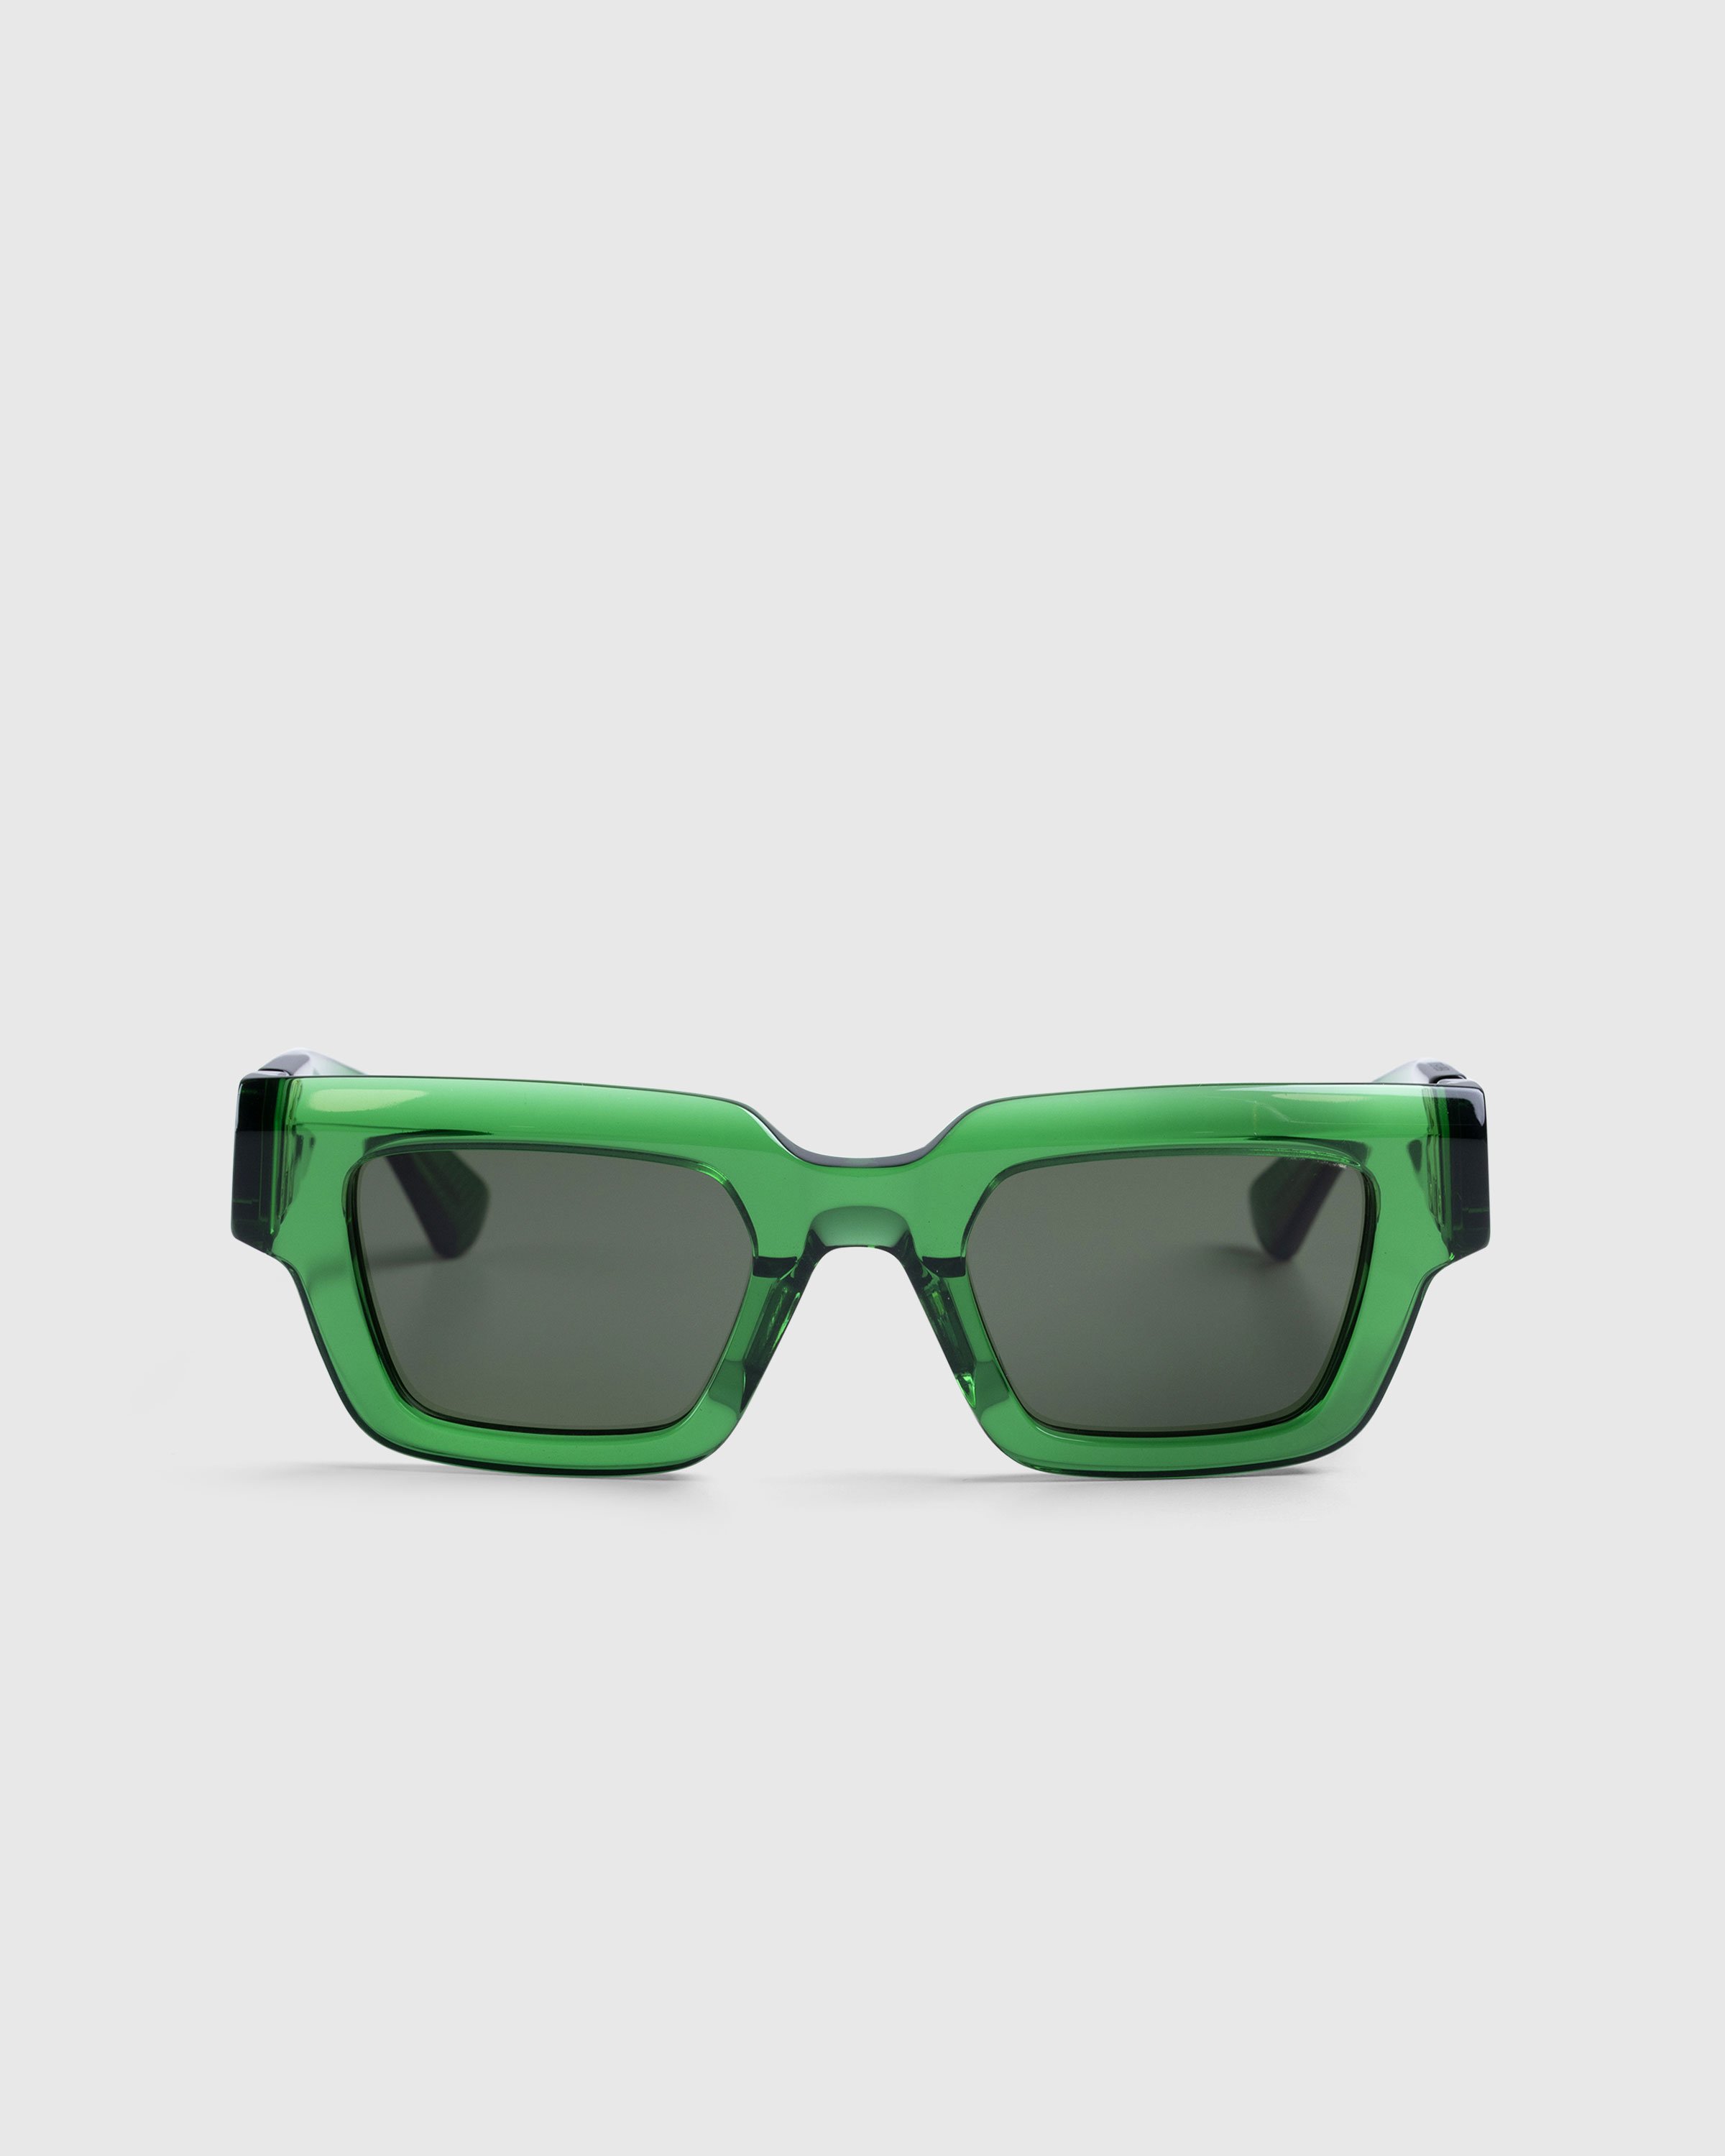 Bottega Veneta - Hinge Acetate Square Sunglasses Green - Accessories - Green - Image 1